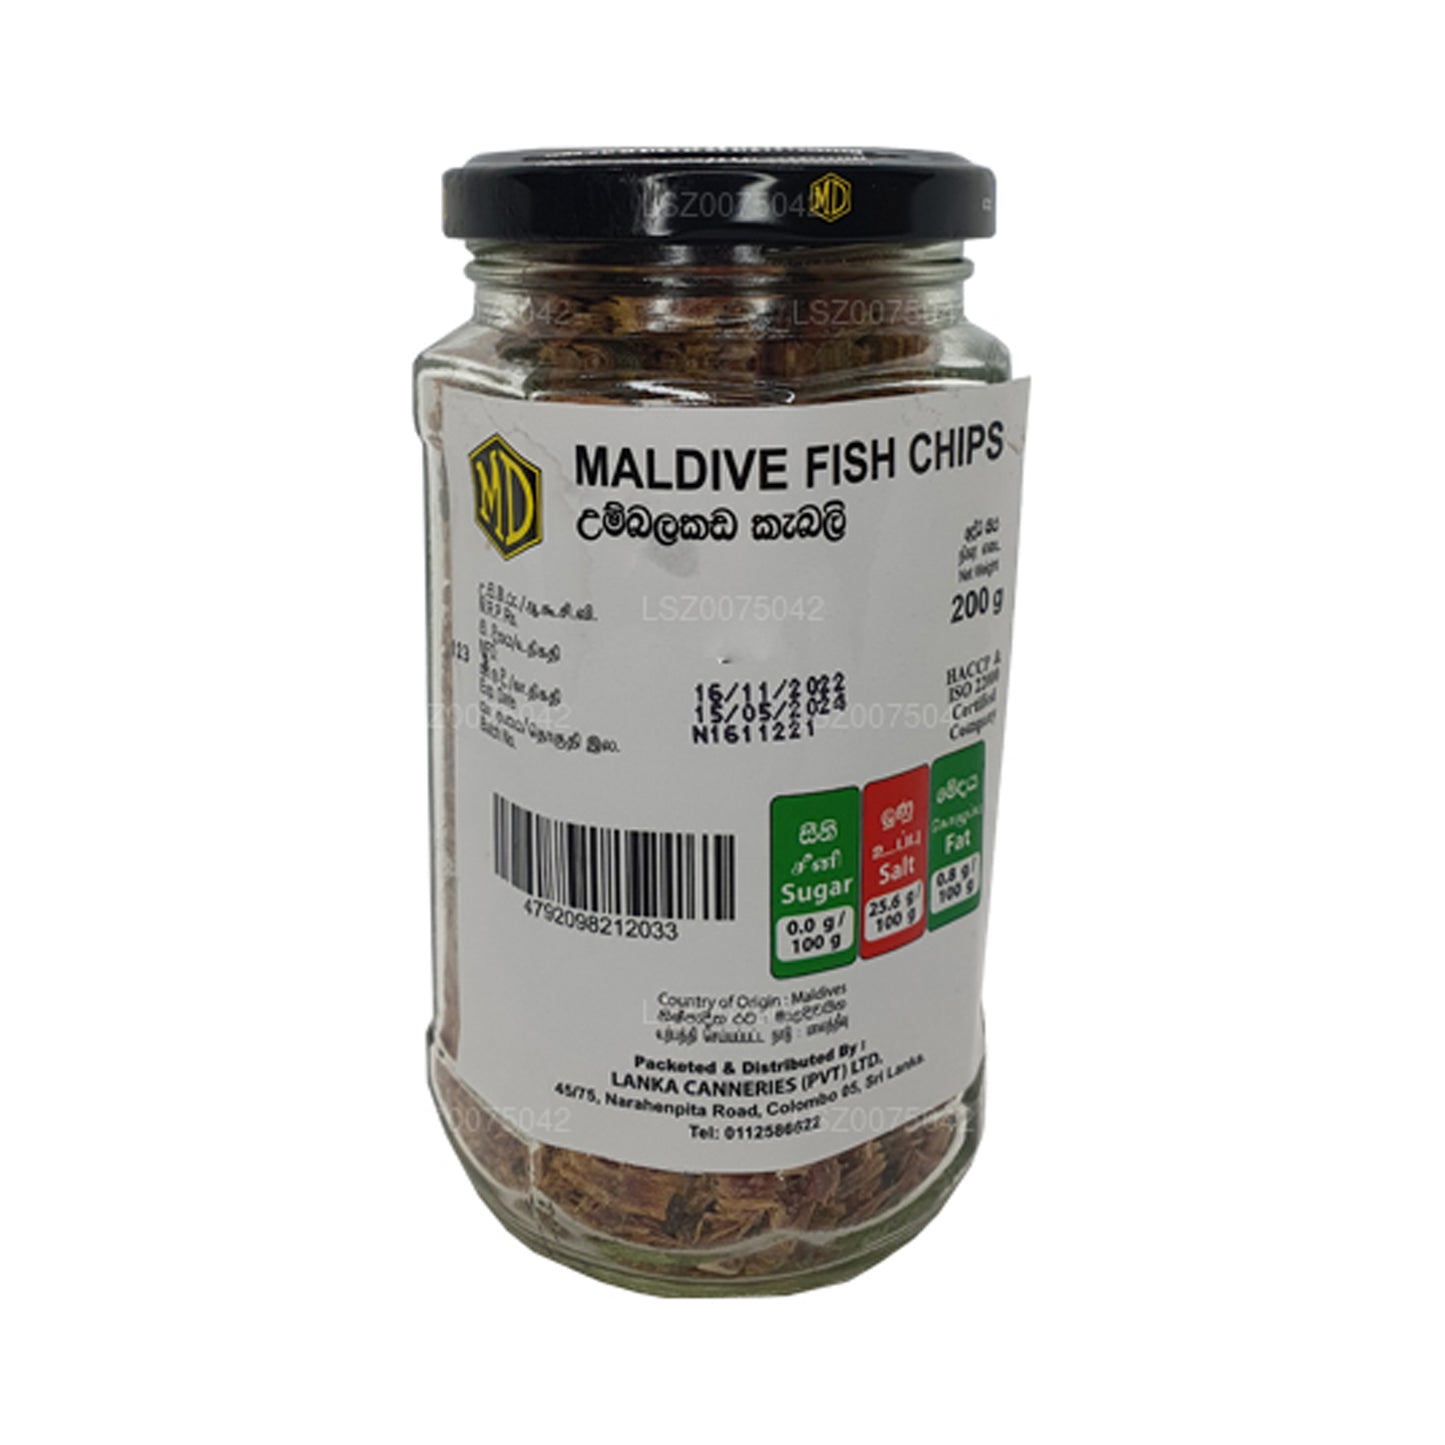 MD Maldive Fish Chips Butelka (200g)